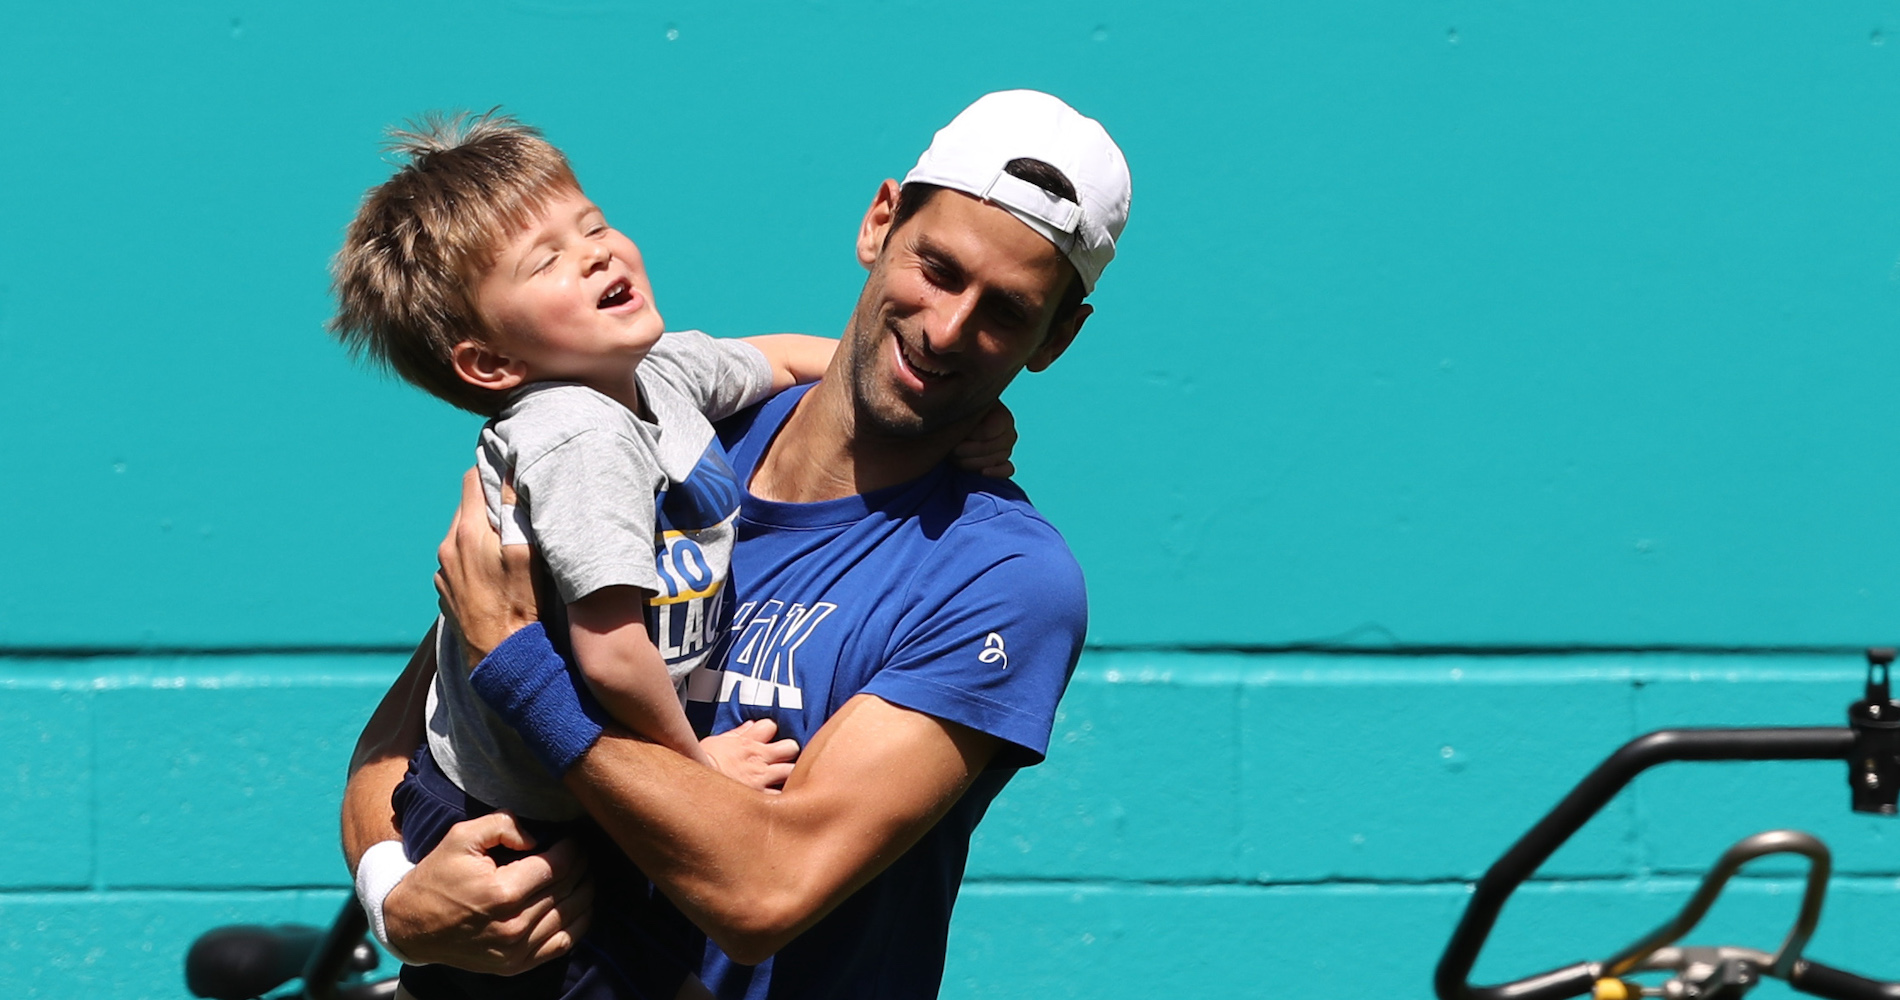 Stefan Djokovic, son of Novak Djokovic, in love with tennis